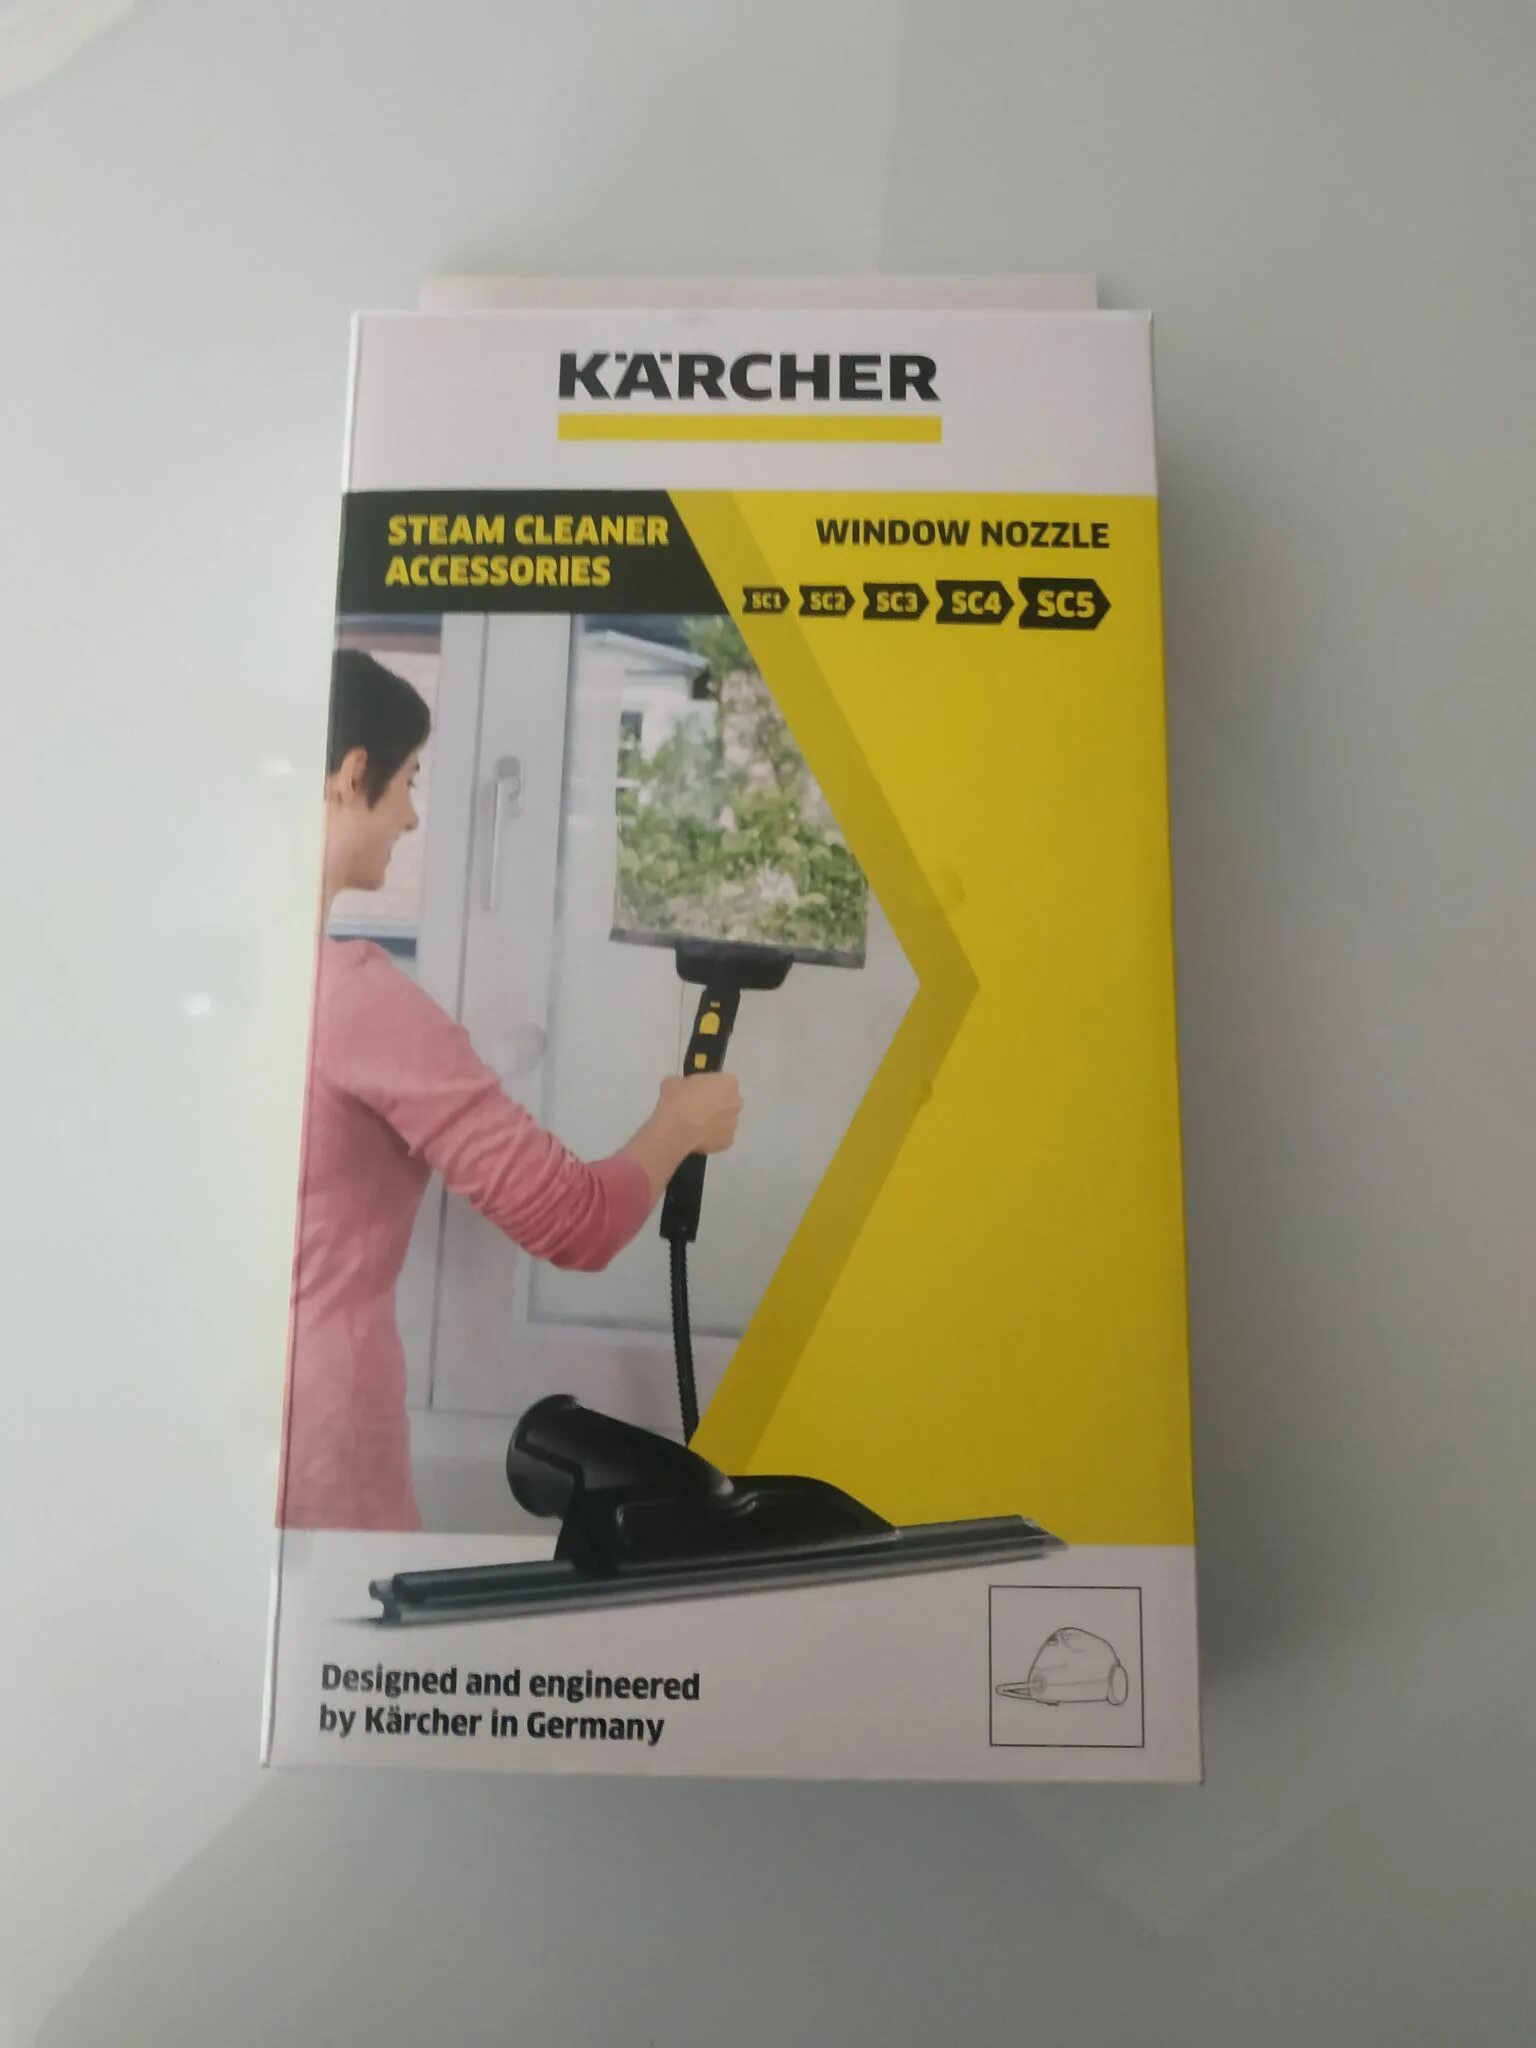 Karcher 2.863 насадка. Насадка для мытья окон 2.863-025.0 Karcher для пароочистителя. 2.863-025.0 Насадка для мойки окон. 2.863-025.0 Керхер. Пароочиститель насадка для мытья окон